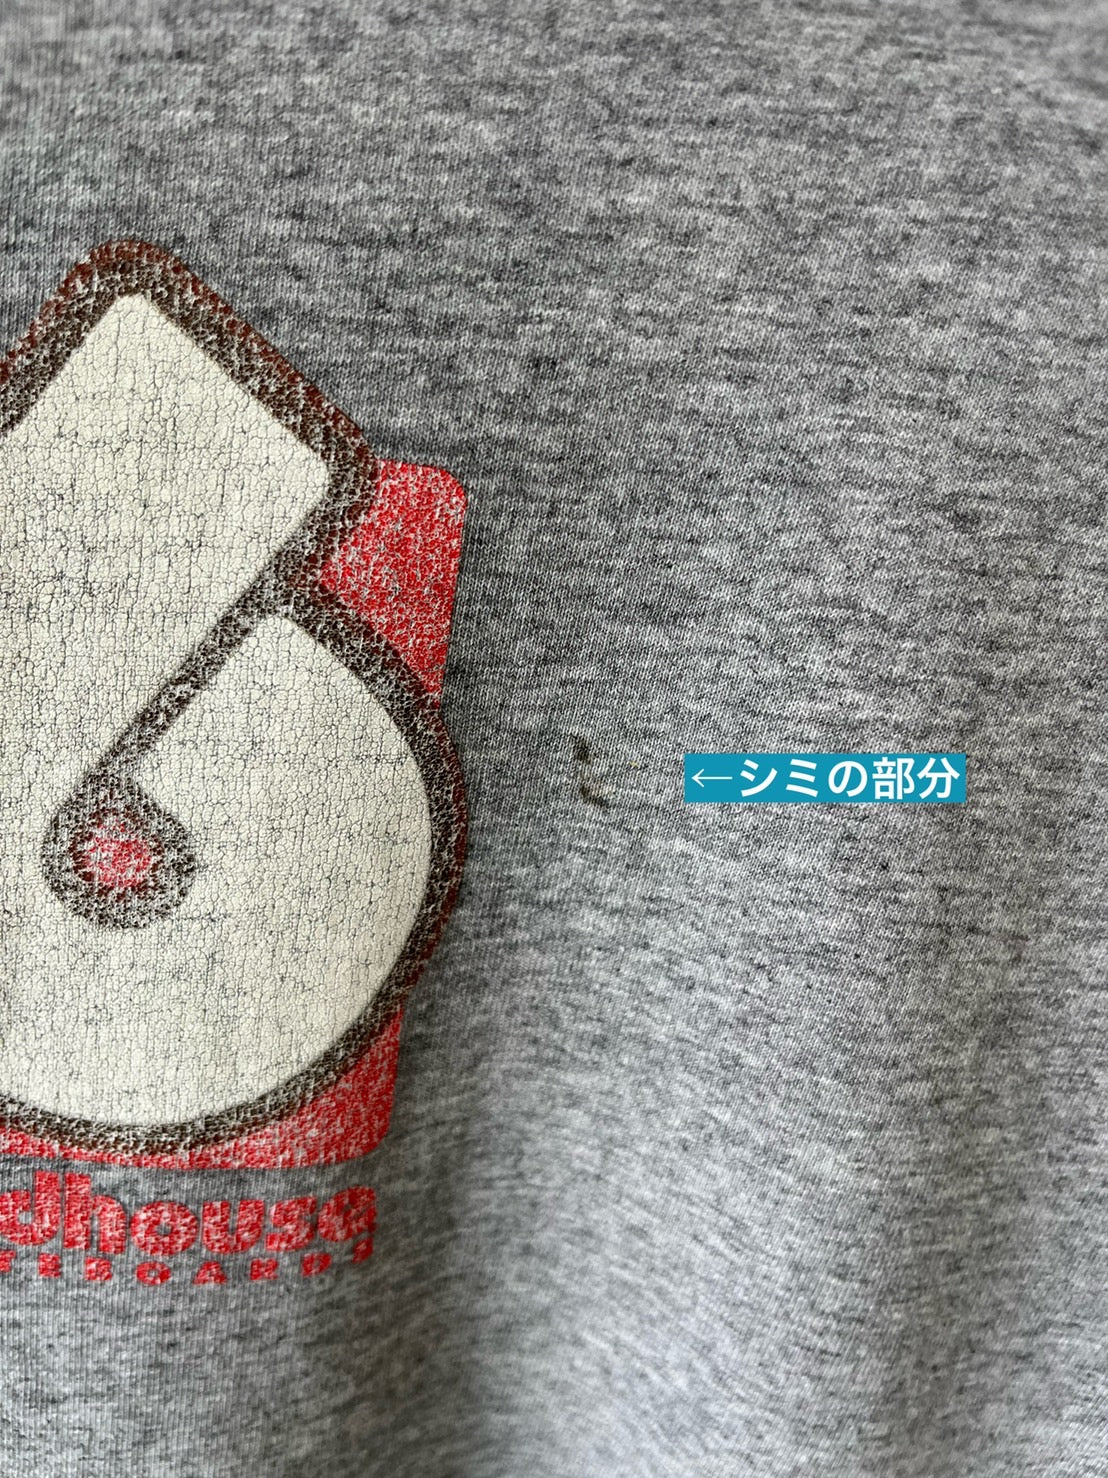 【birdhorse】2000's vintage skateboard t-shirt made in USA (men's M)